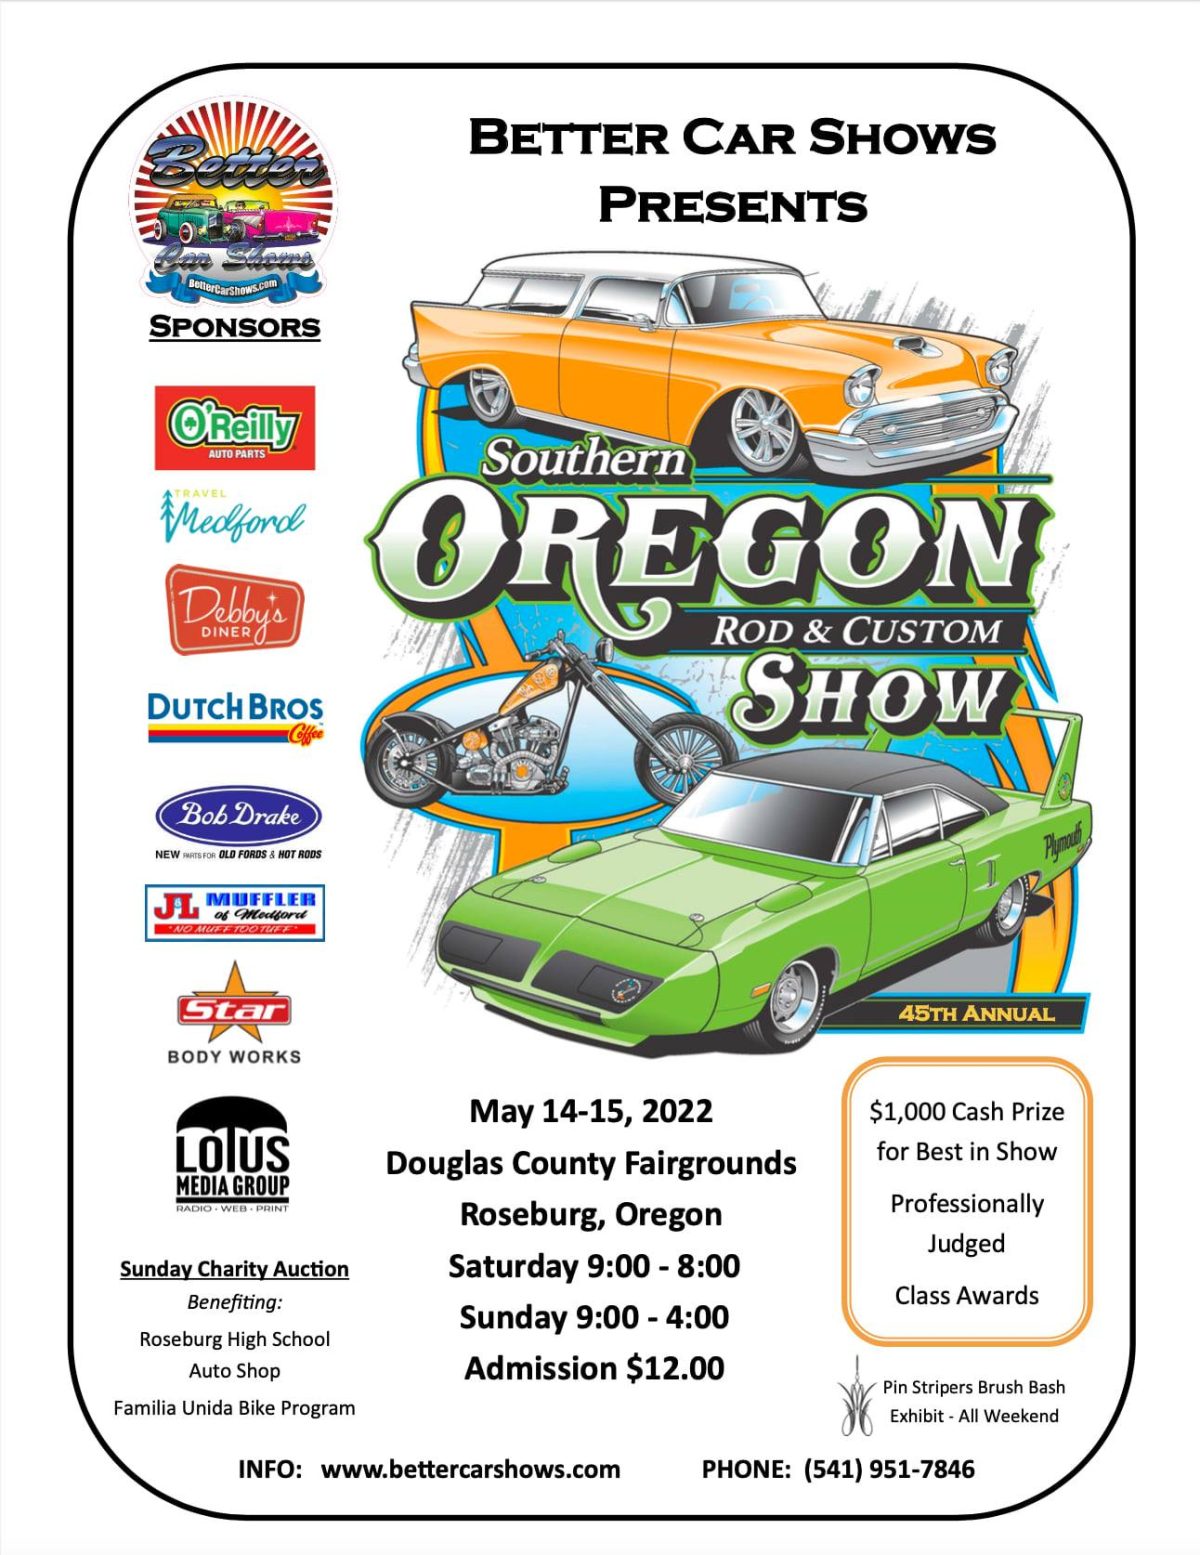 Southern Oregon Rod & Custom Show